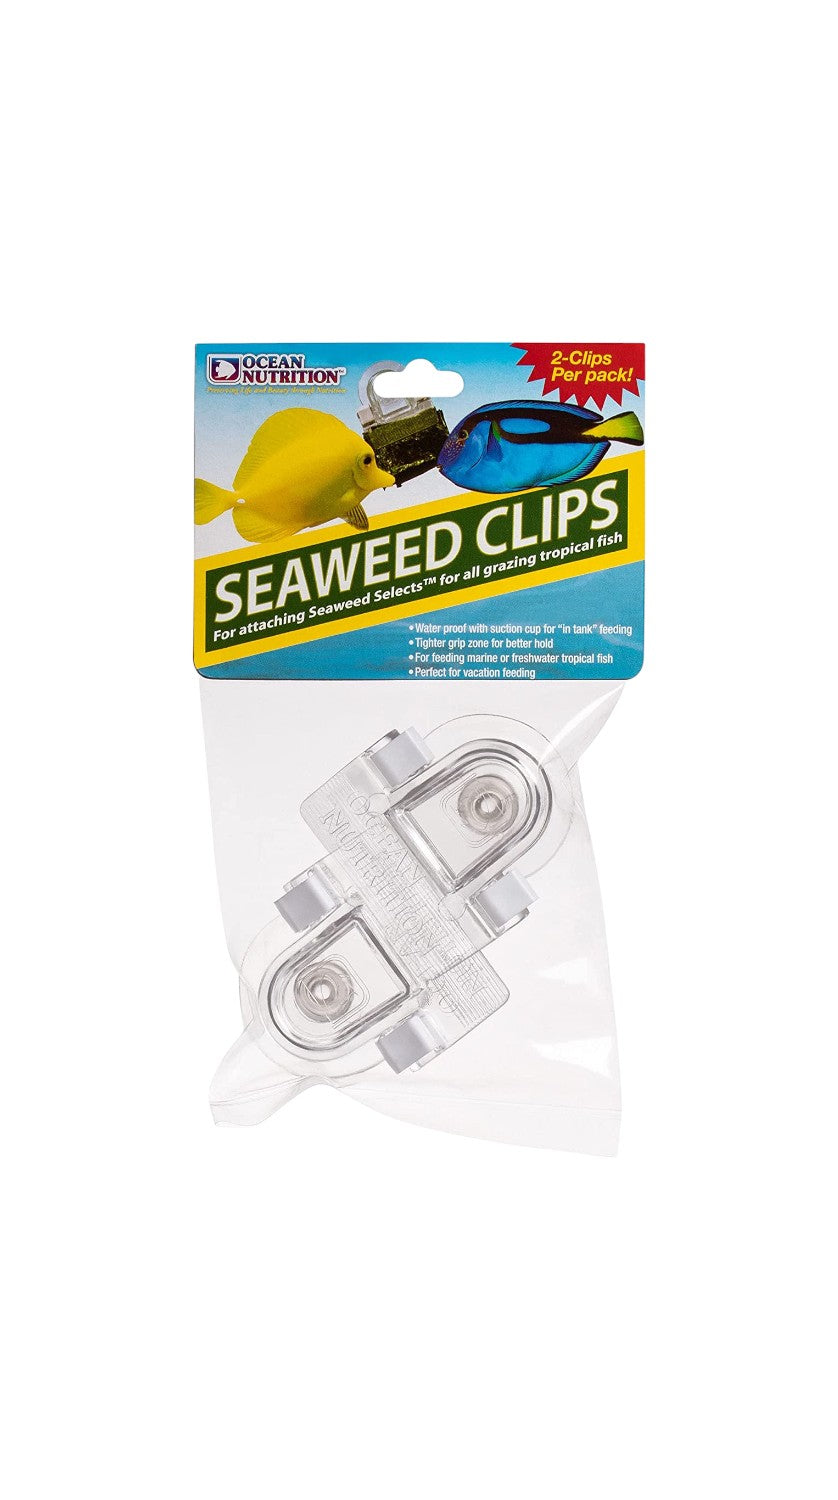 Ocean Nutrition Seaweed Feeding Clips - Includes 2 clips